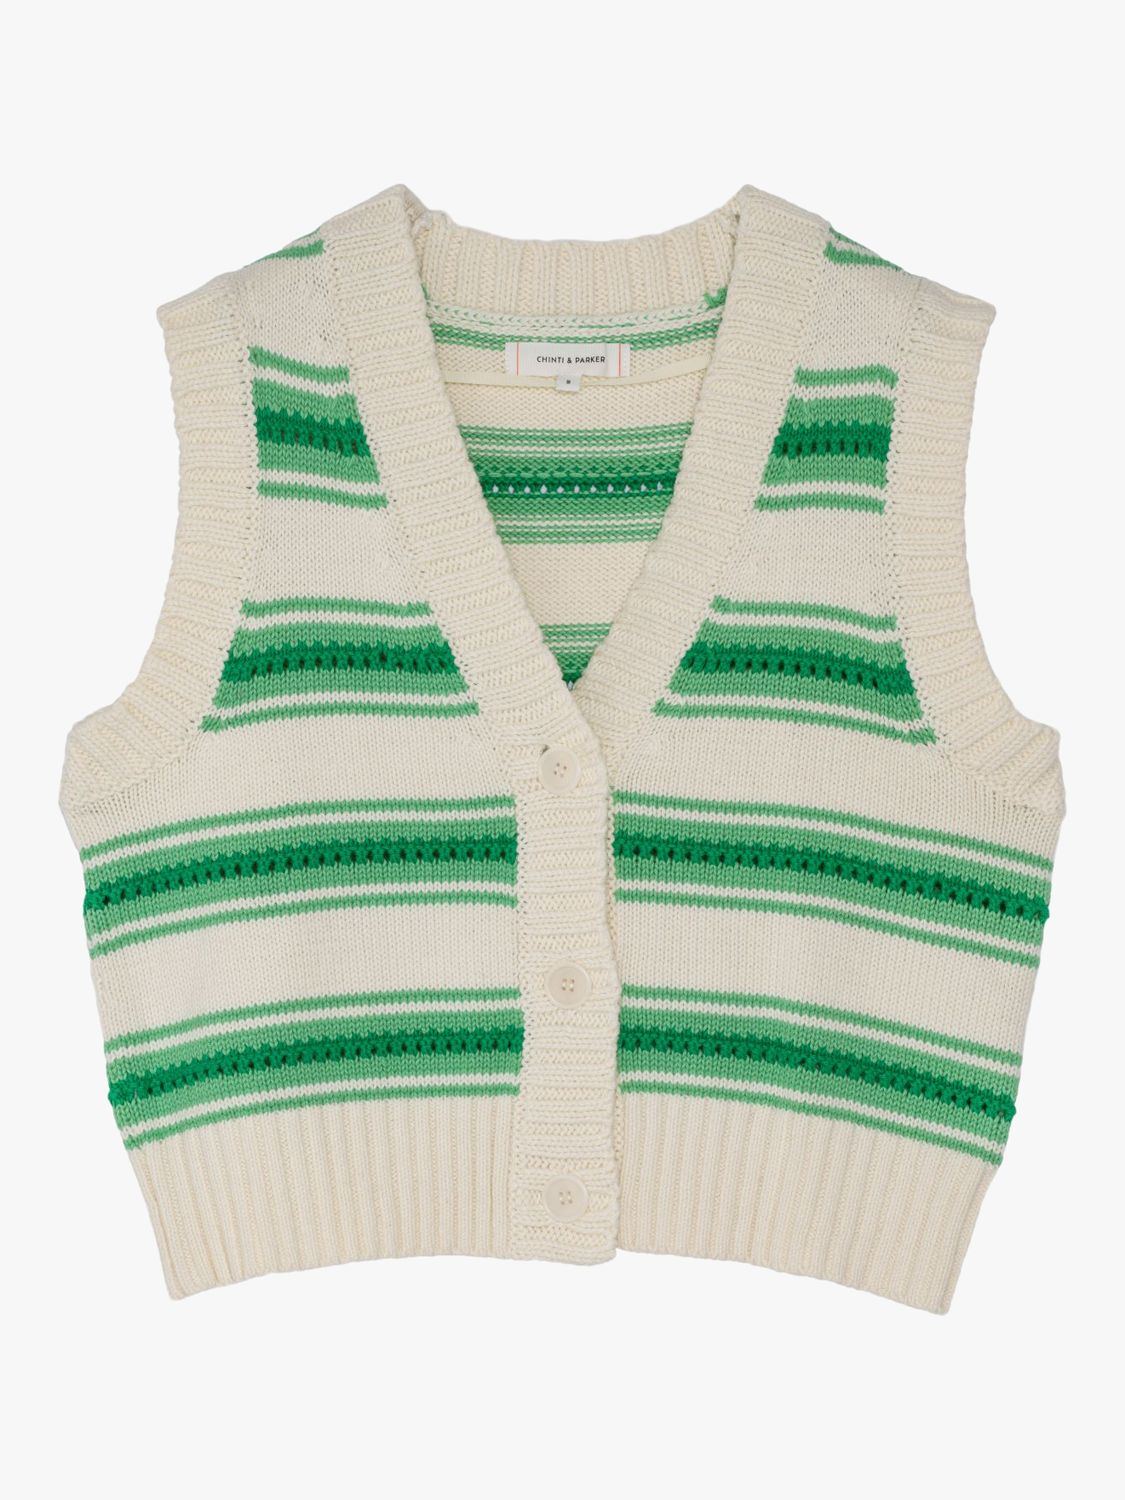 Buy Chinti & Parker Crochet Vest Cardigan Online at johnlewis.com